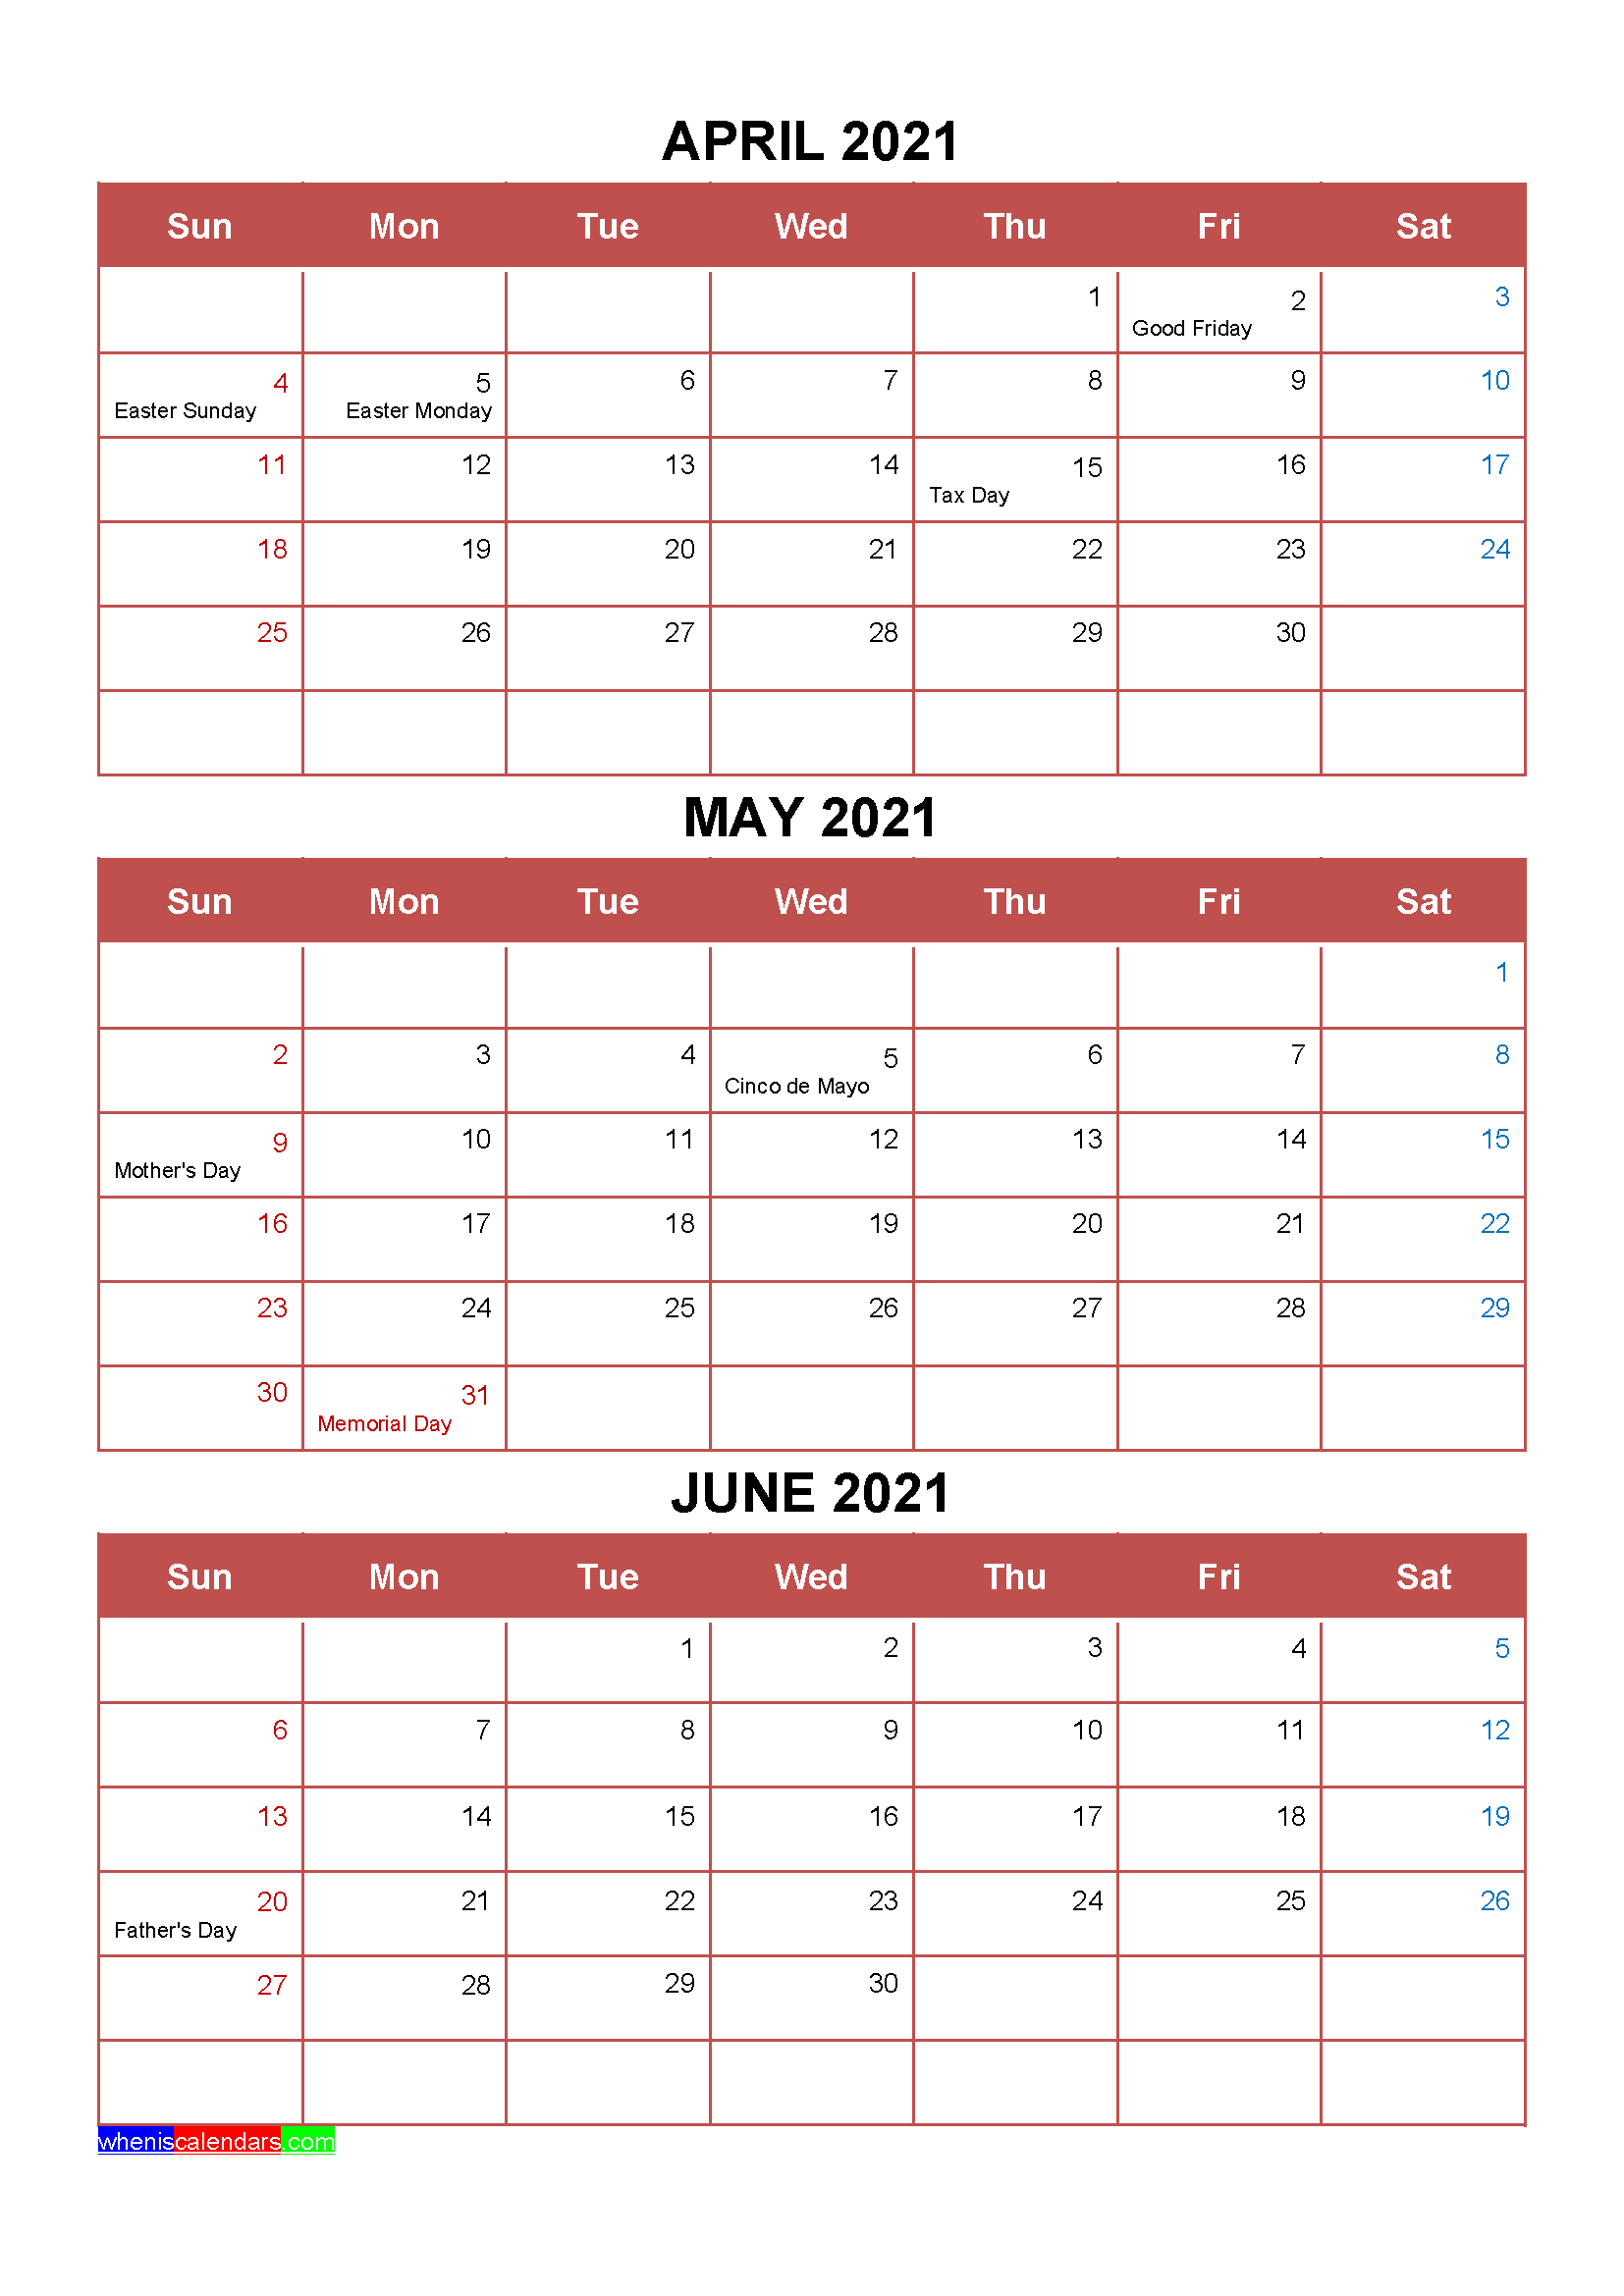 Gsu Calendar 2021 2022